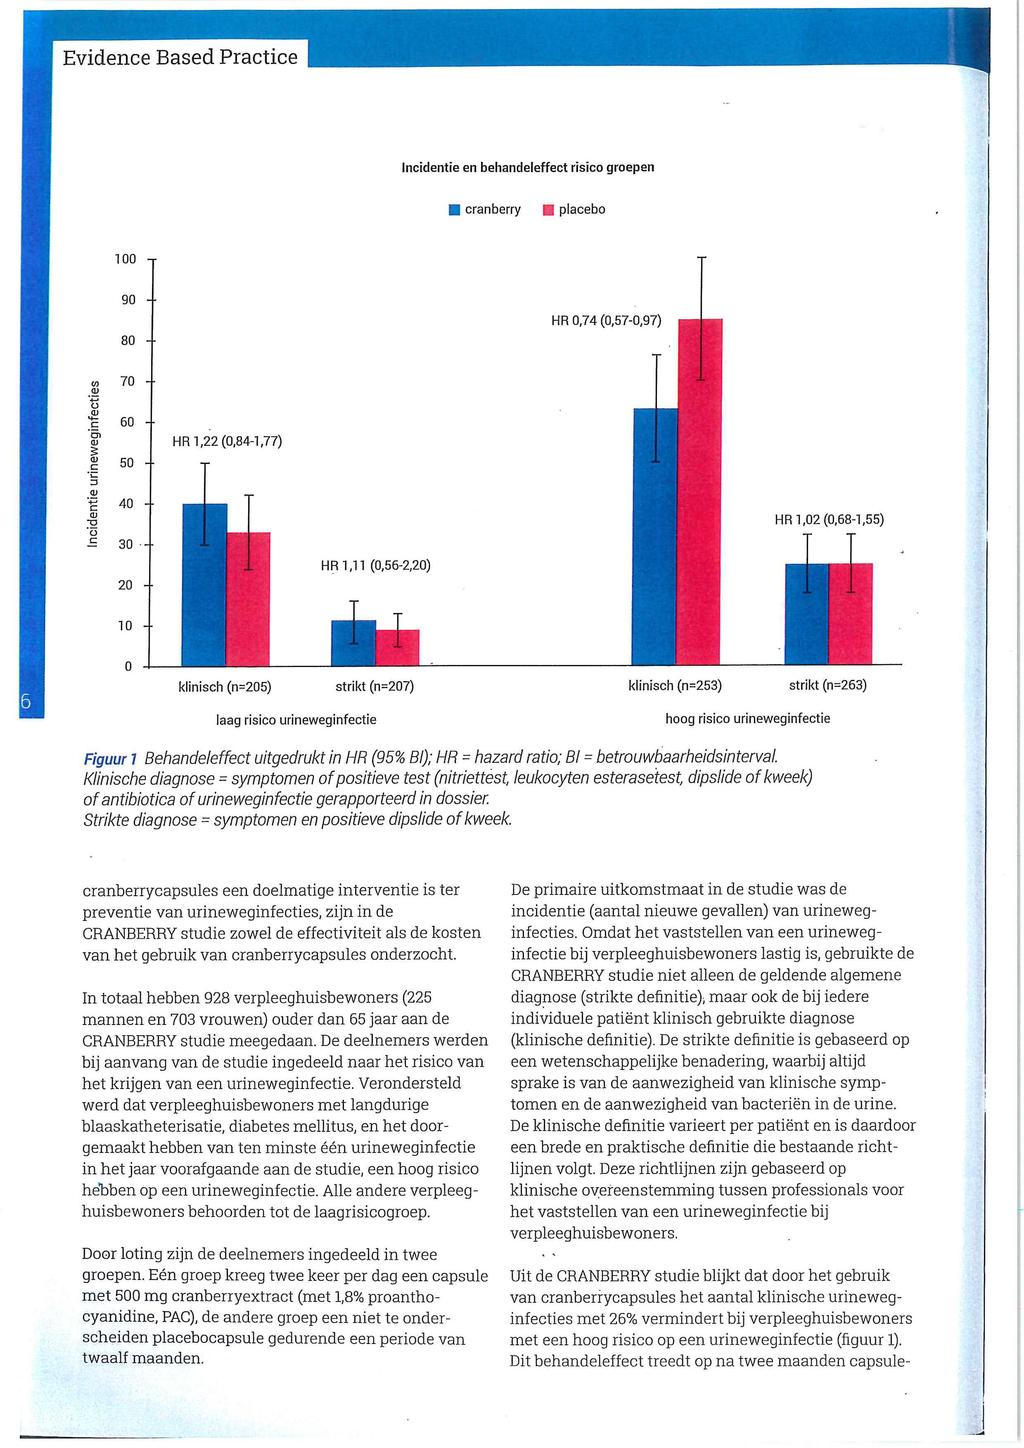 Incidentie en behandeleffect risico groepqn cranberry ~ ;placebo 100 90 80 N TO U N c 60.~ a~ 3 ~ 50.